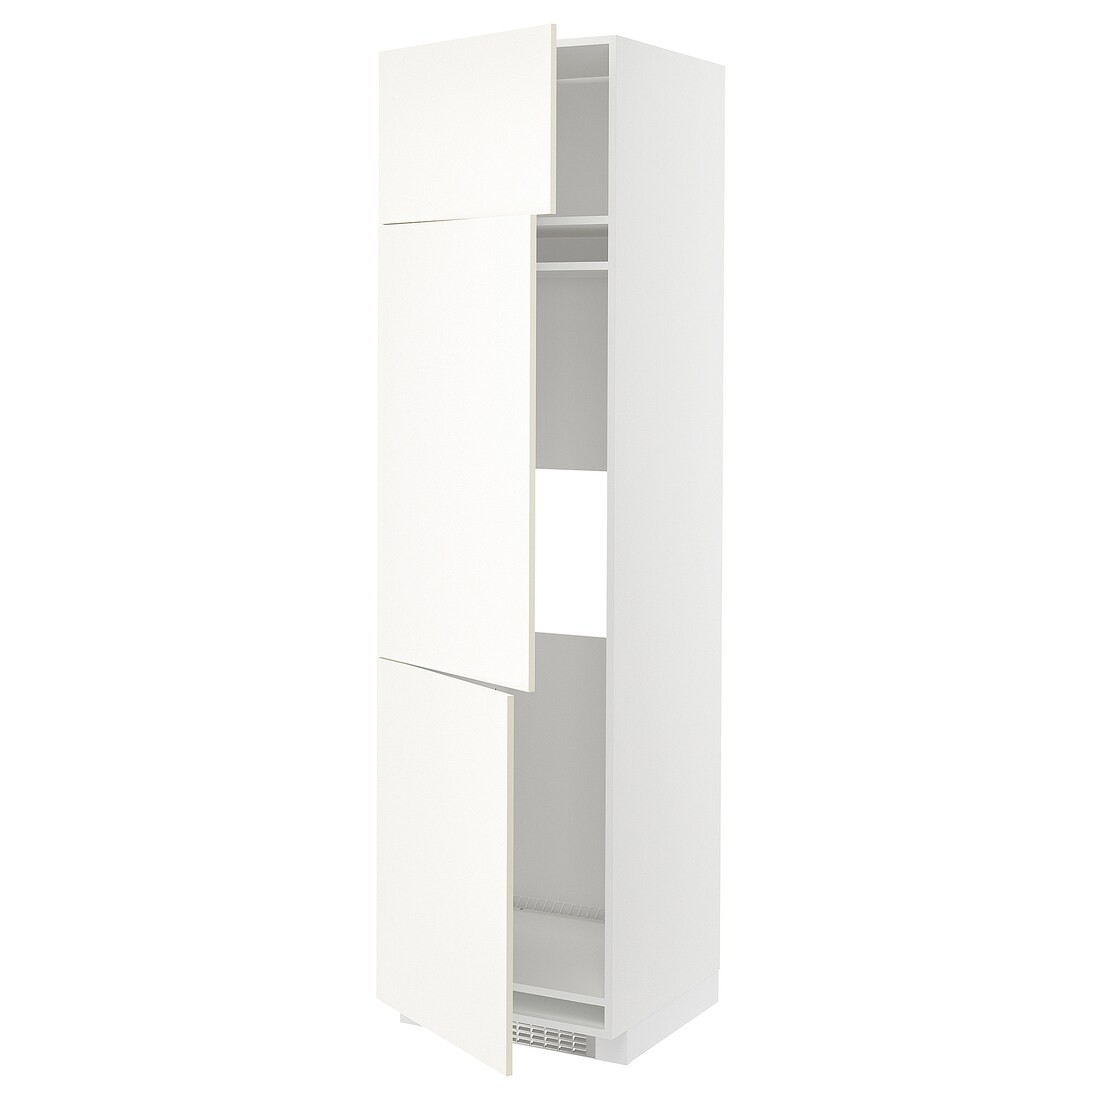 IKEA METOD МЕТОД Высокий шкаф для холодильника / морозильника / 3 дверцы, белый / Vallstena белый 79507355 795.073.55